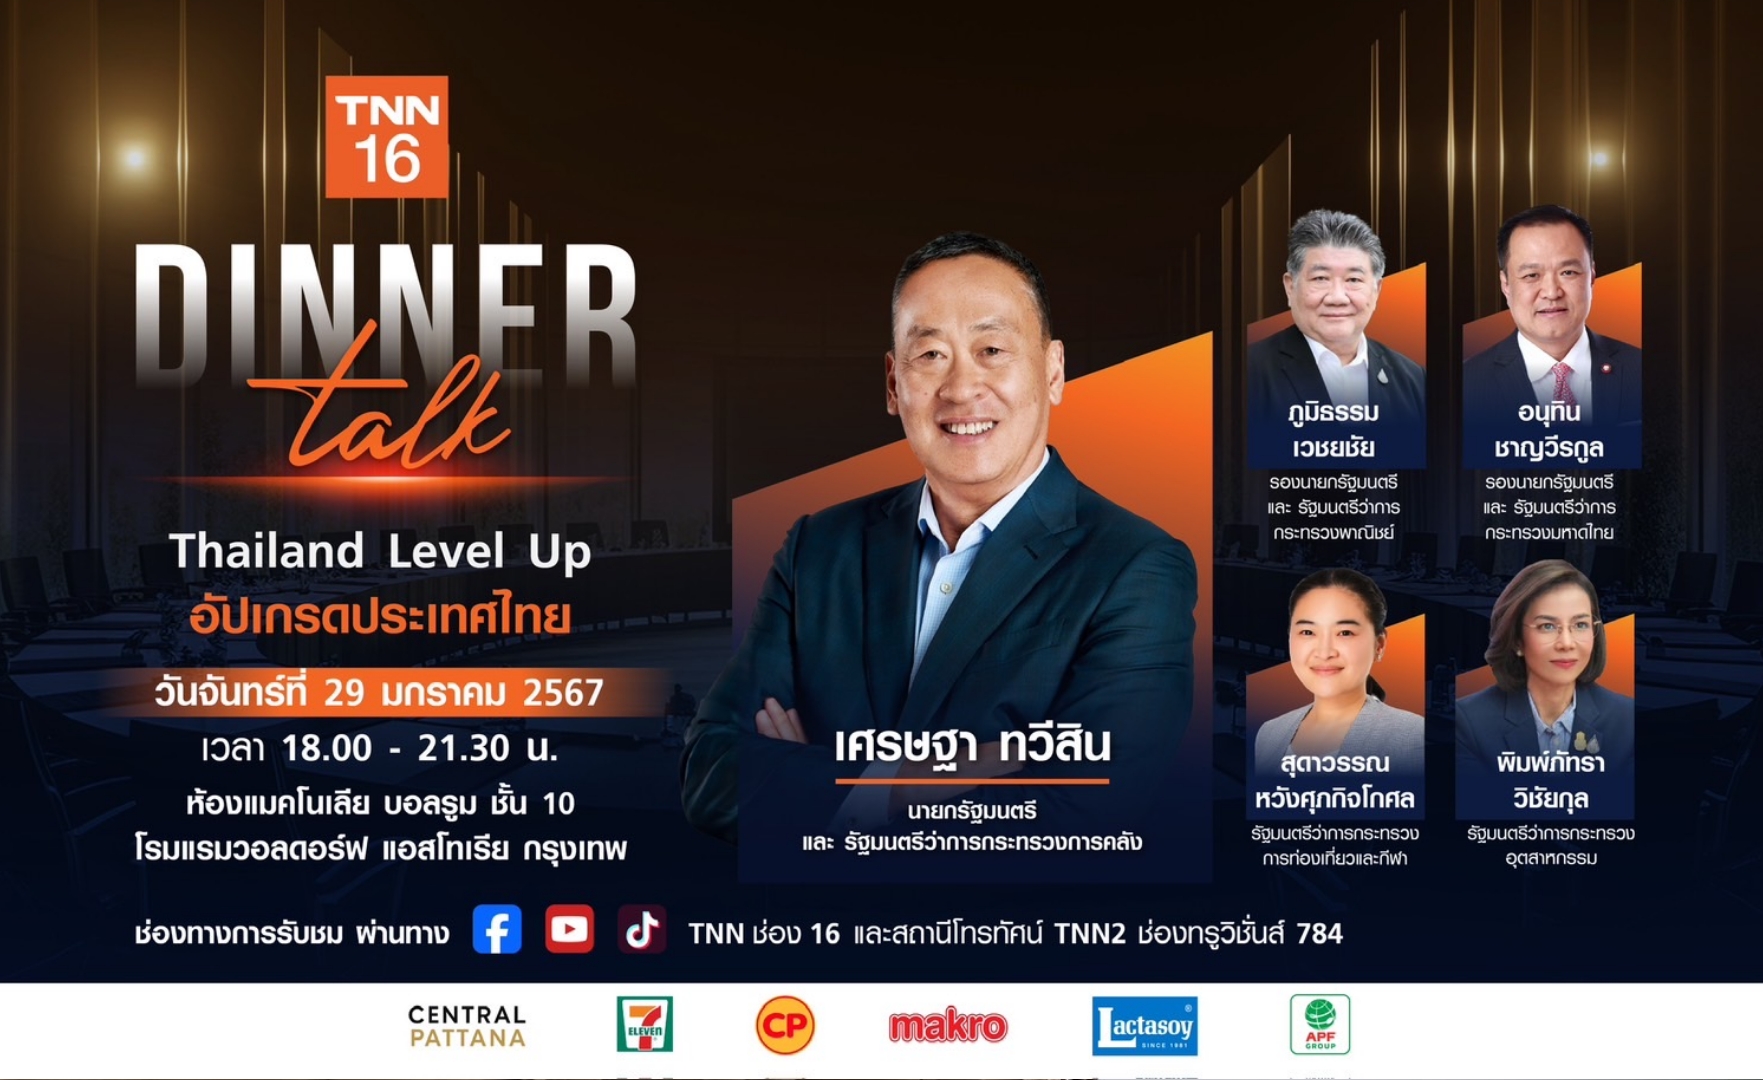 TNN ช่อง 16 เปิดเวทียิ่งใหญ่รับปี 2024  Dinner Talk “Thailand Level Up อัปเกรดประเทศไทย” 